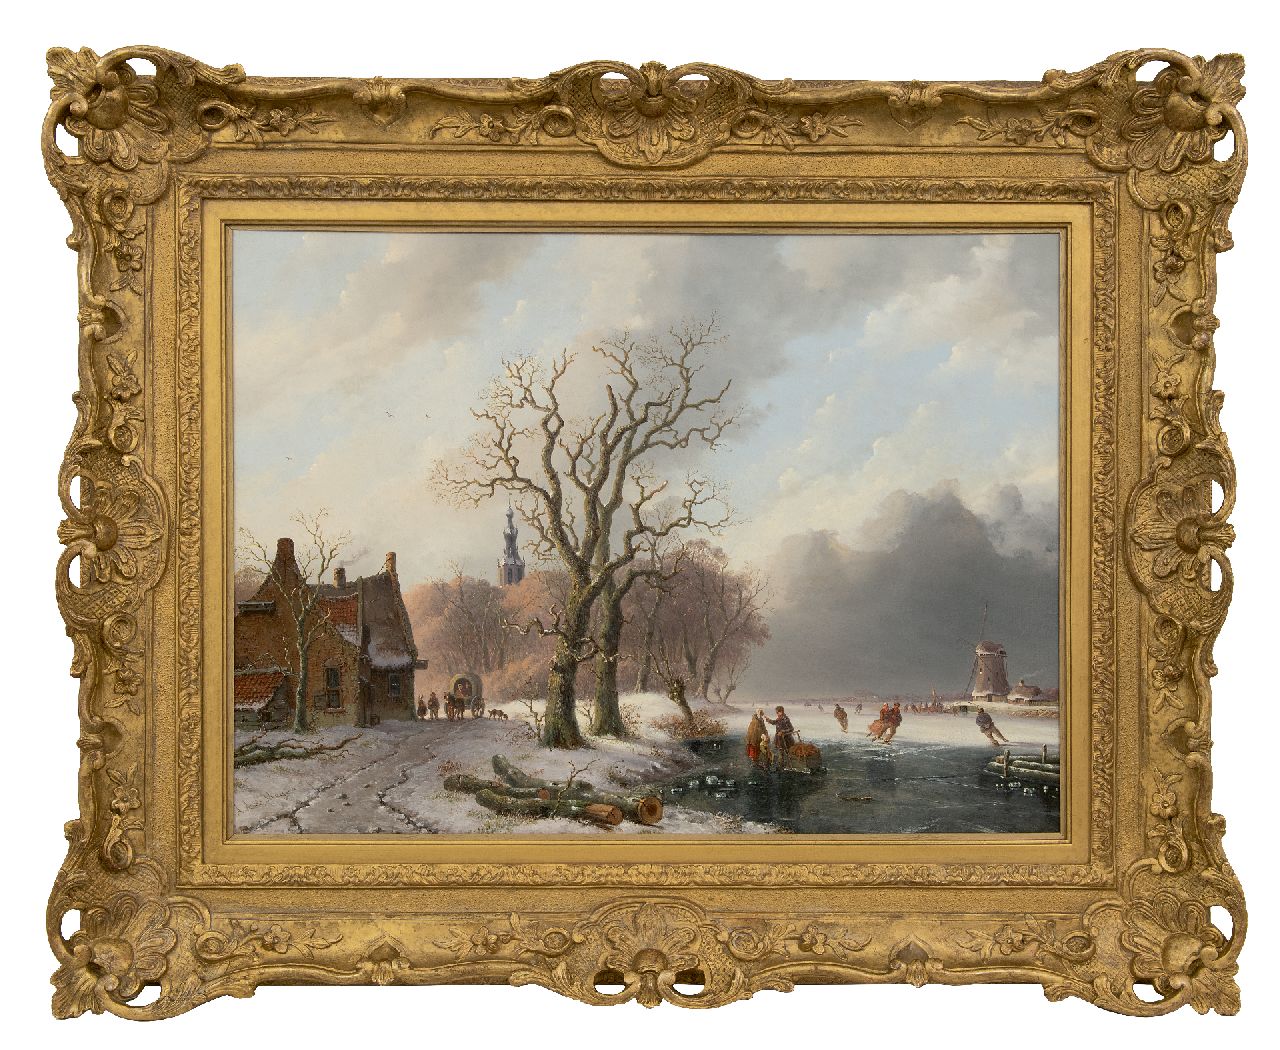 Meijier A.A. de | Anthony Andreas de Meijier | Paintings offered for sale | Skaters on a frozen river near a town, oil on panel 52.1 x 72.1 cm, signed l.l.